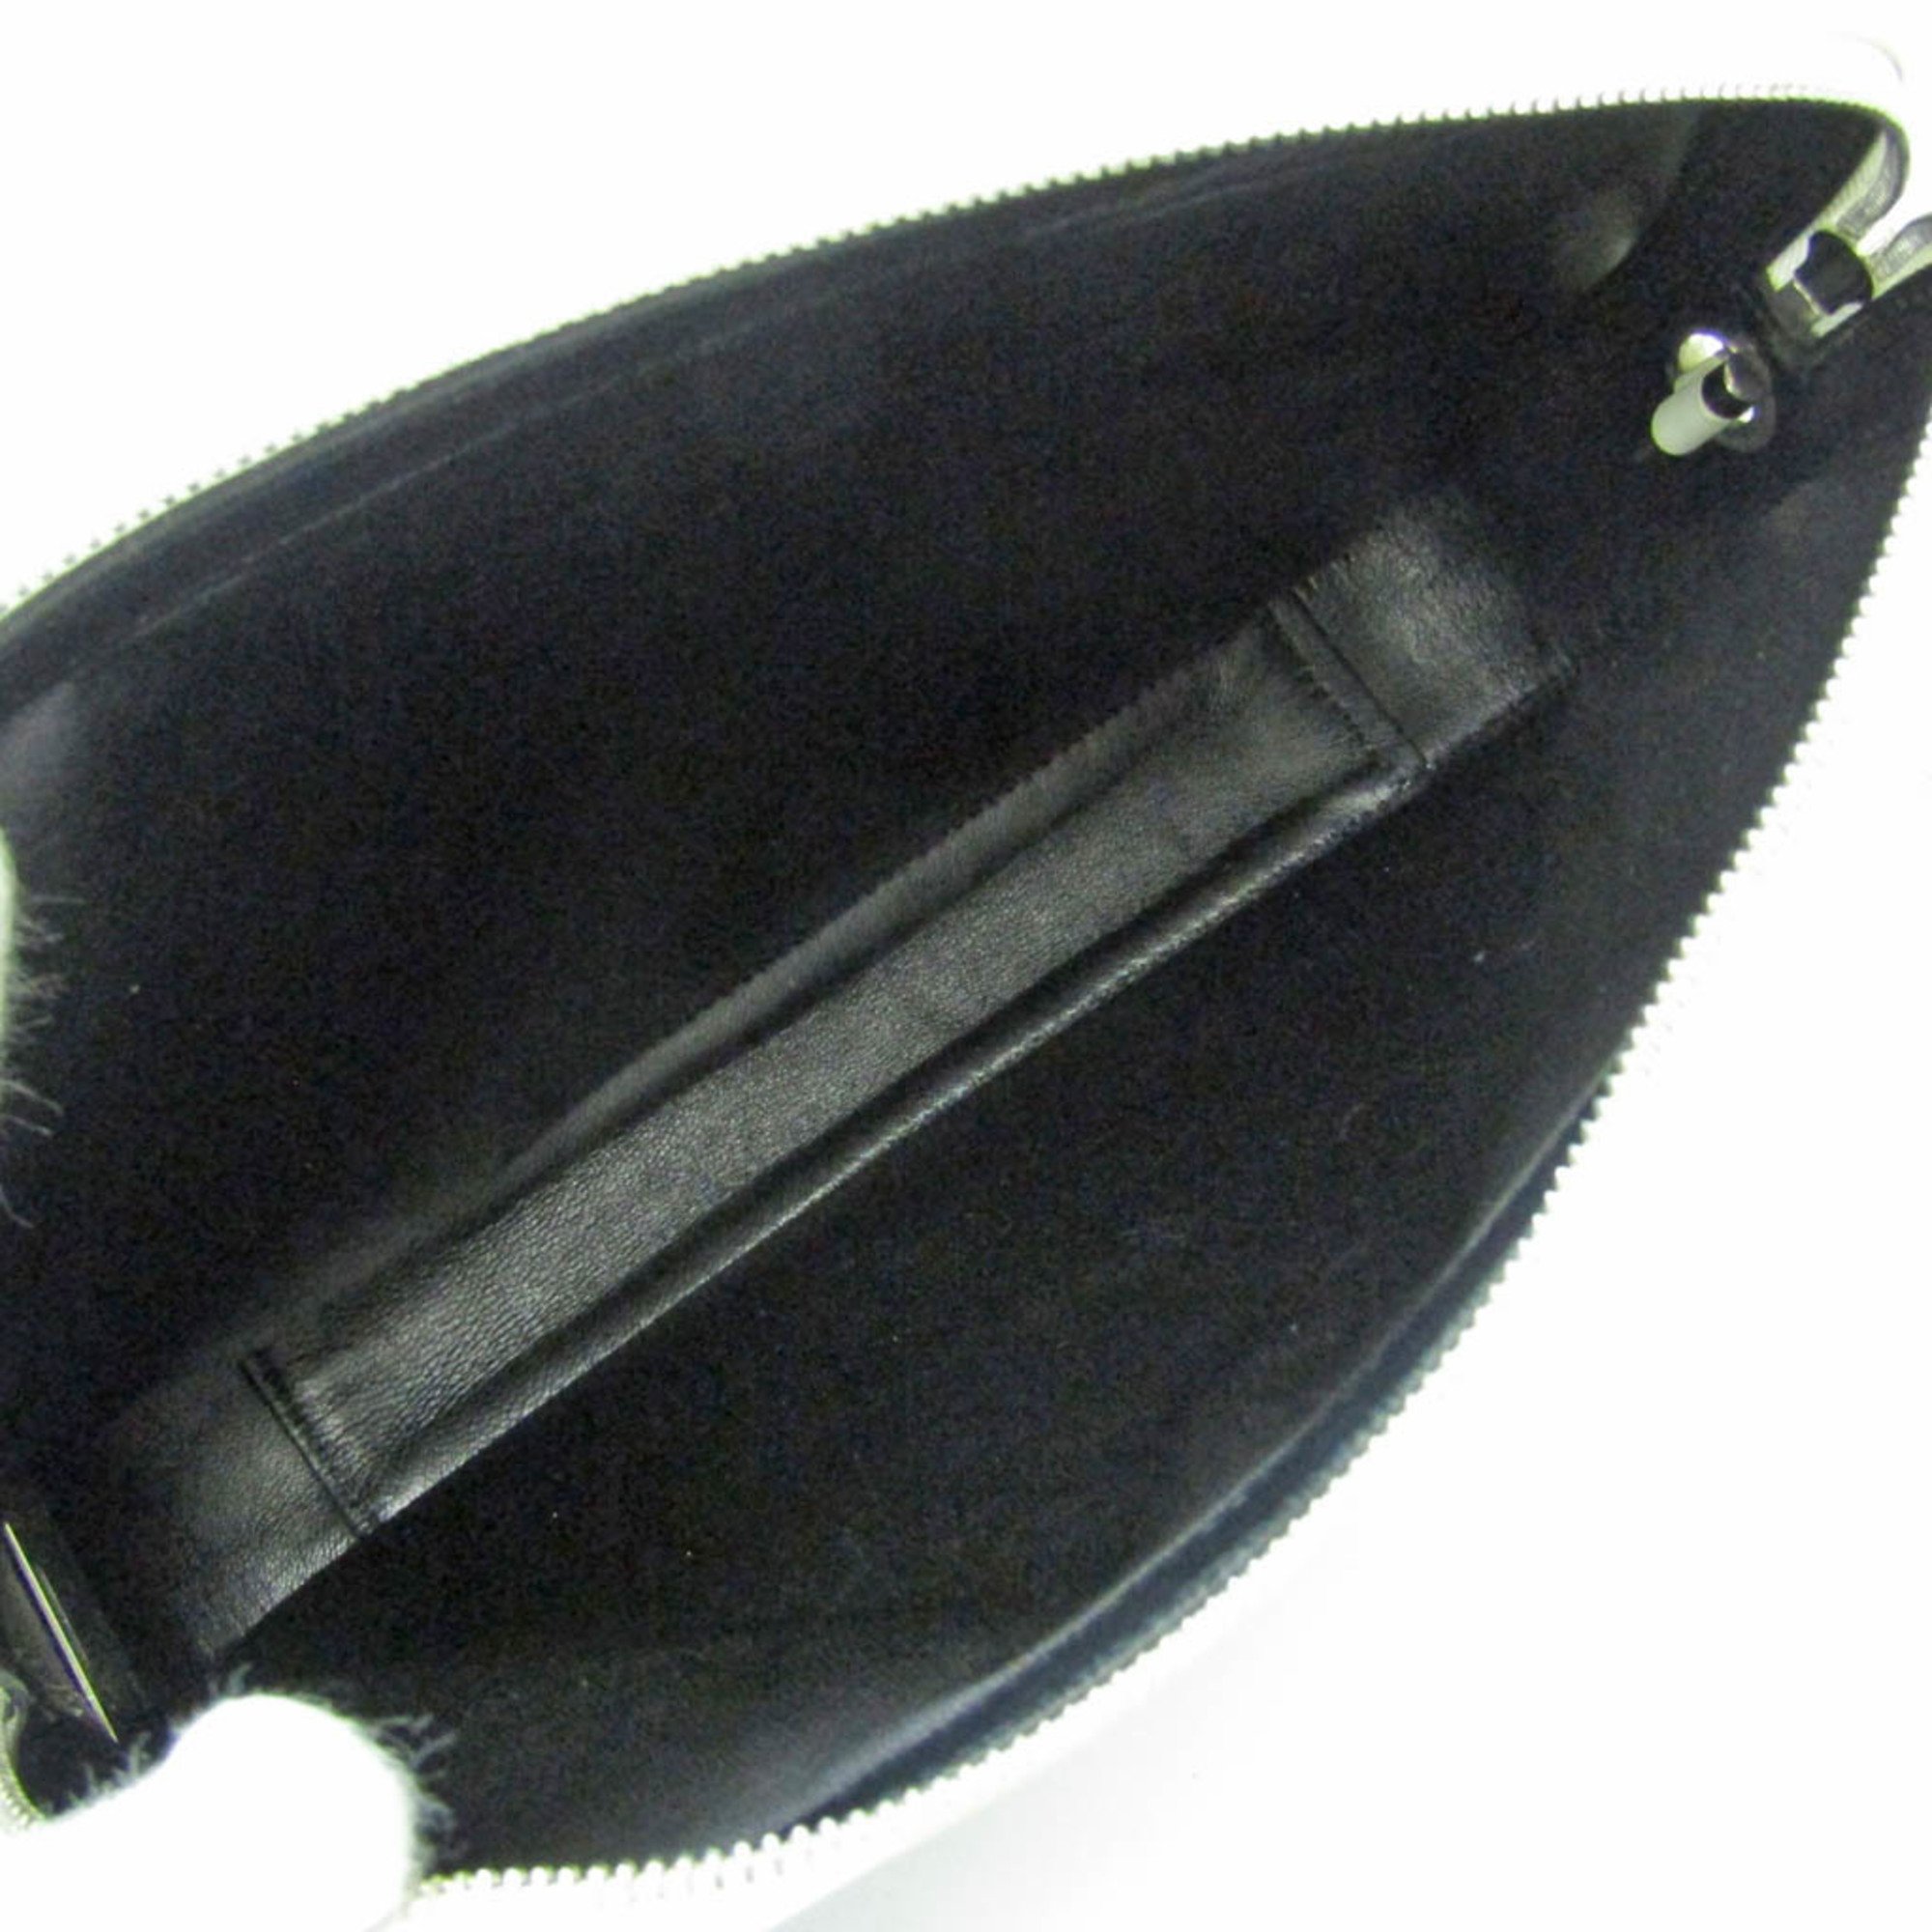 Celine Women's Leather Clutch Bag Black,Off-white